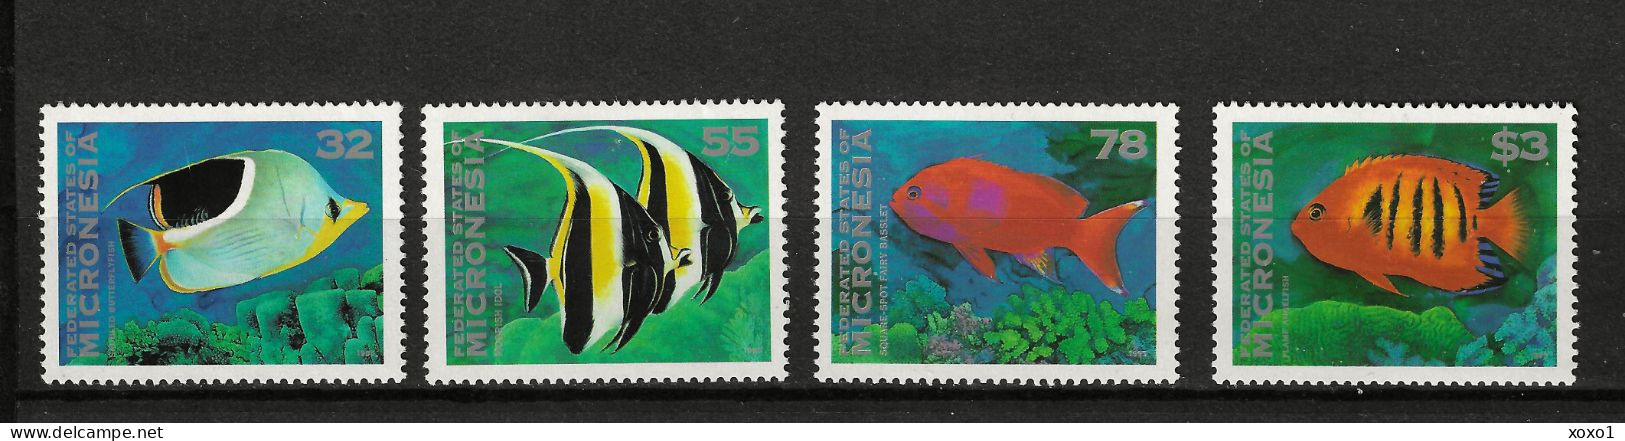 Micronesia 1995 MiNr. 418 - 421 Mikronesien Marine Life Fishes 4v MNH** 12.00 € - Micronésie